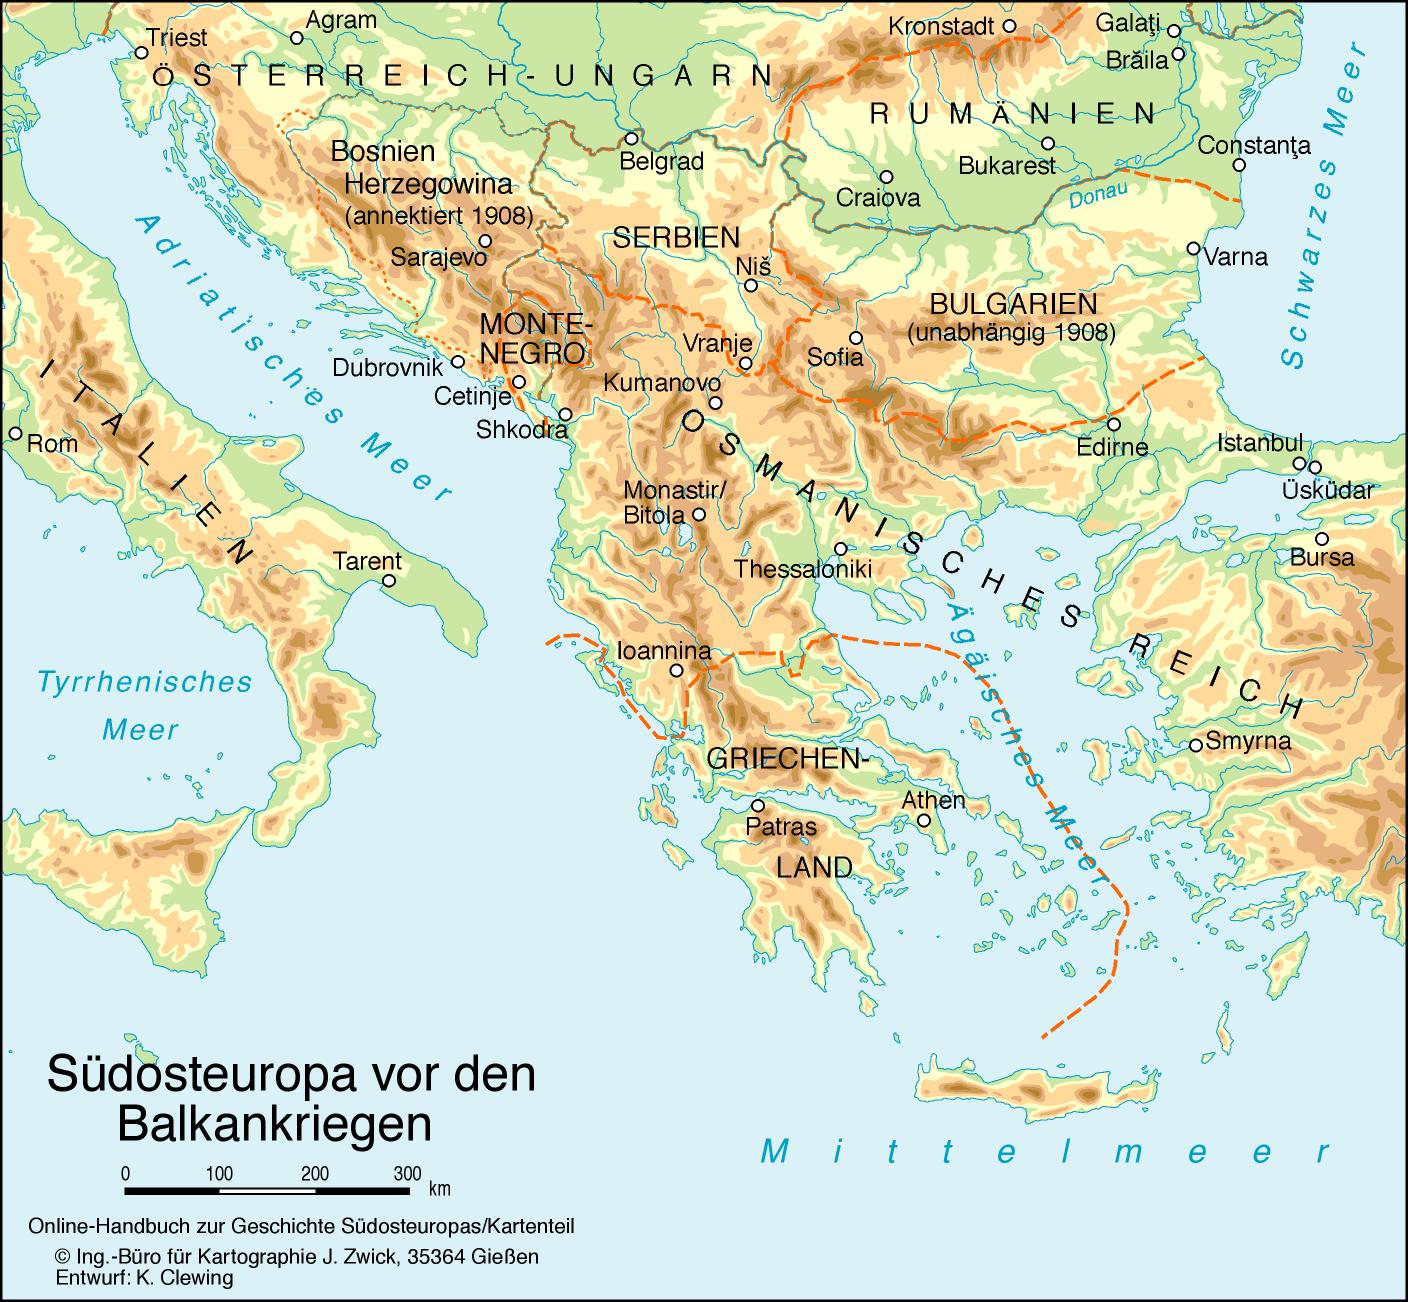 Südosteuropa vor den Balkankriegen